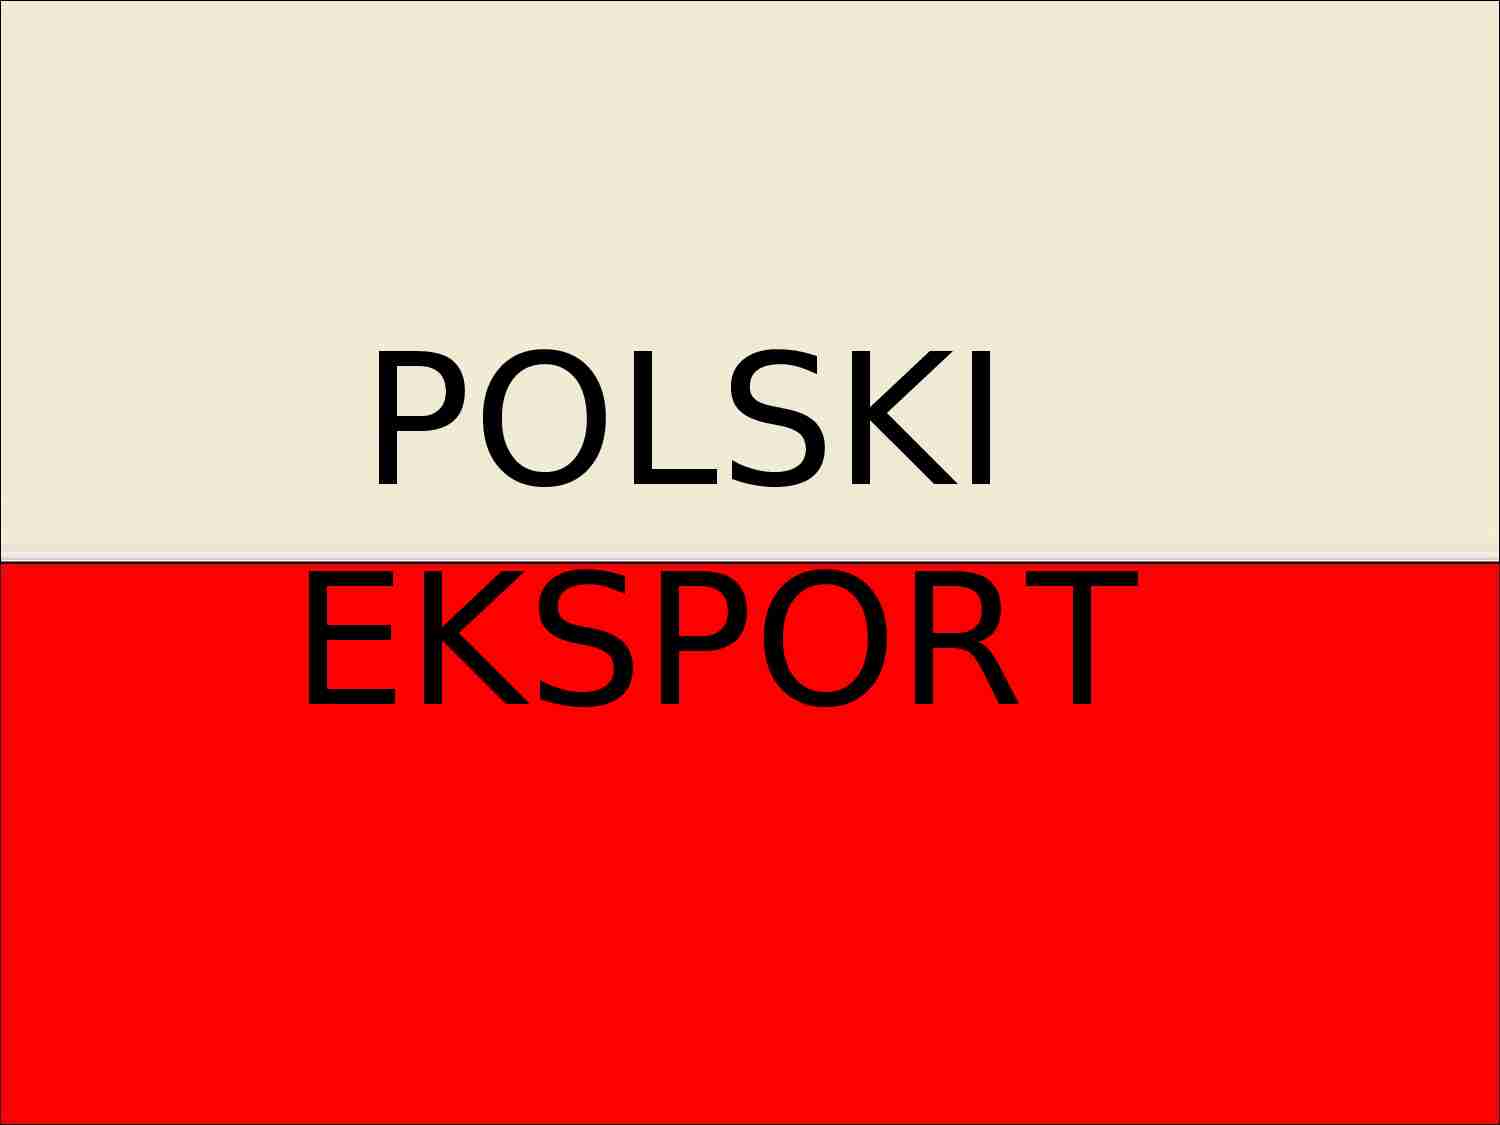 Eksport Polski- prezentacja - strona 1